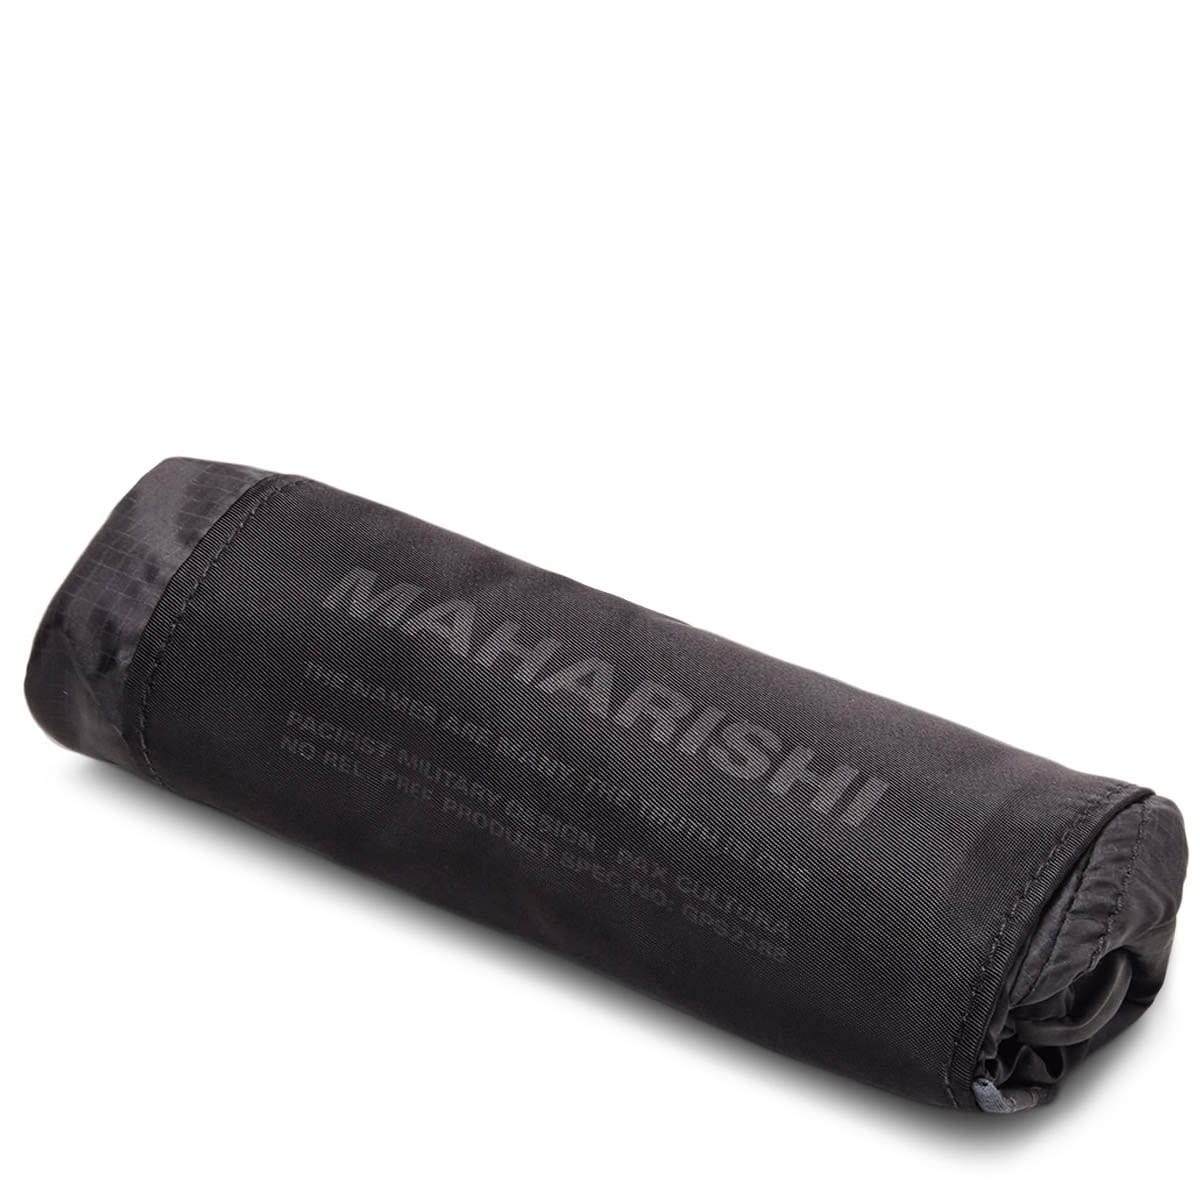 Maharishi Bags & Accessories BLACK / O/S ROLLAWAY BACKPACK